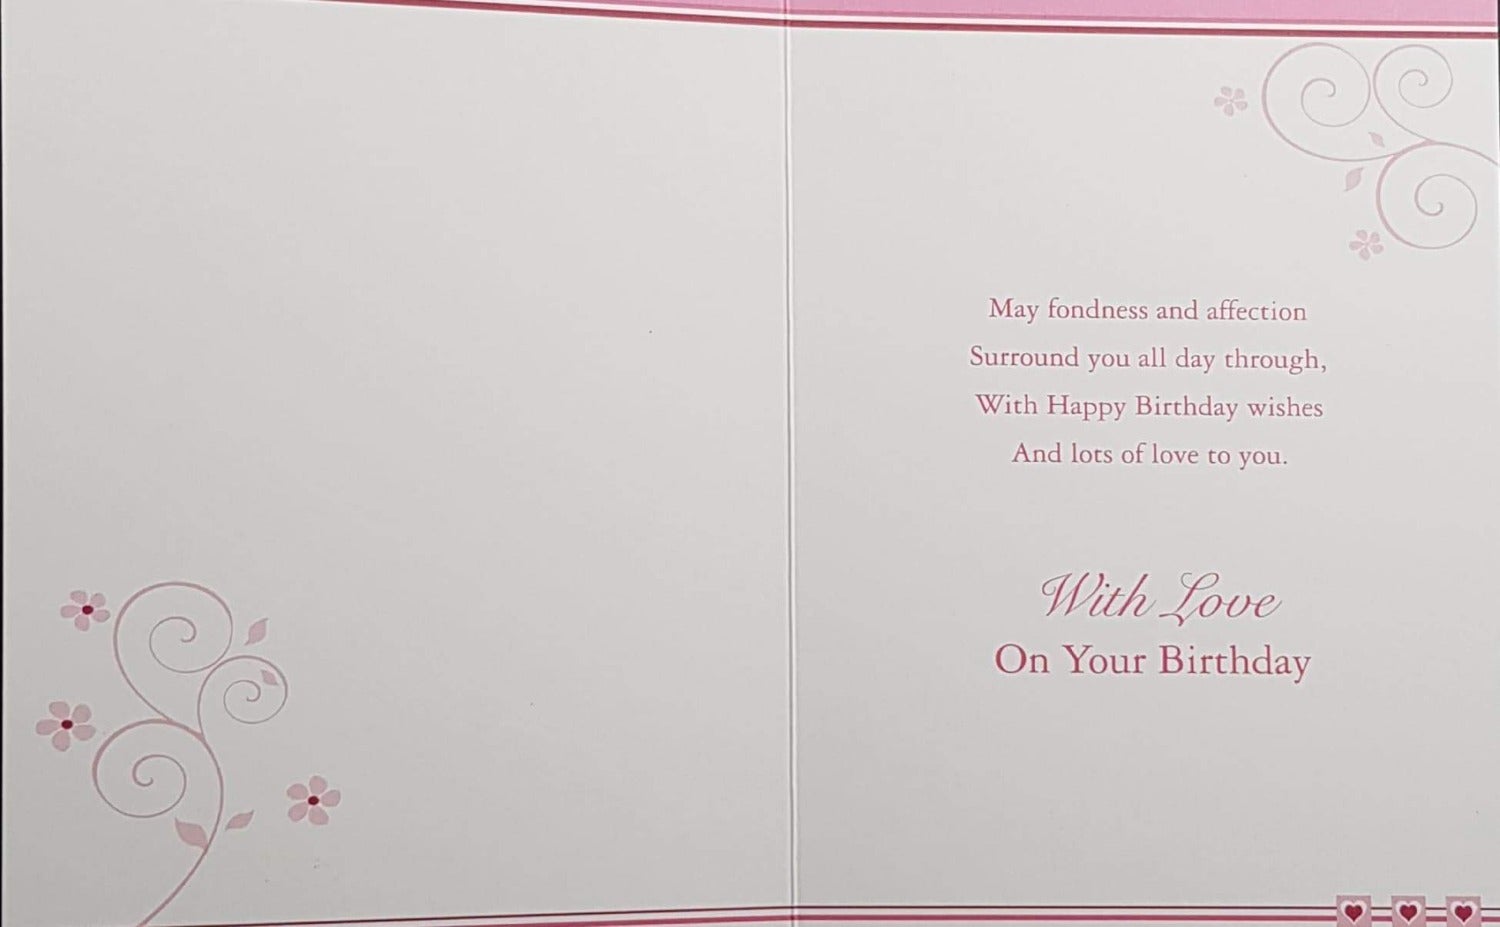 Birthday Card - Godmother / Birthday Cupkaces Decorated Pink Flowers